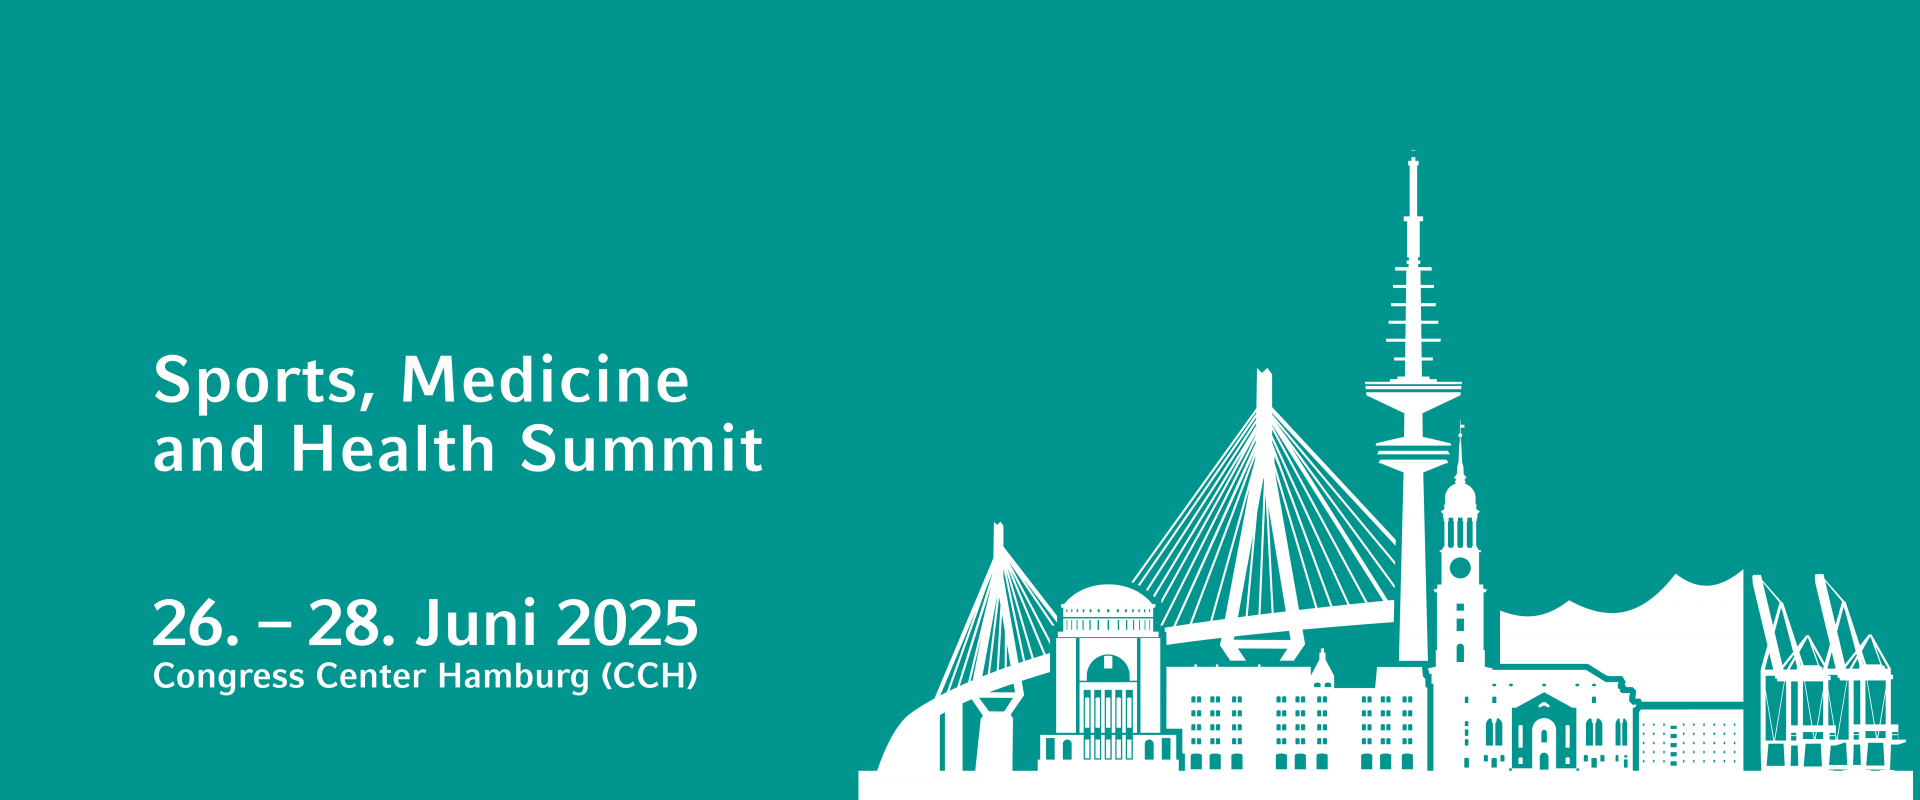 Sports, Medicine and Health Summit